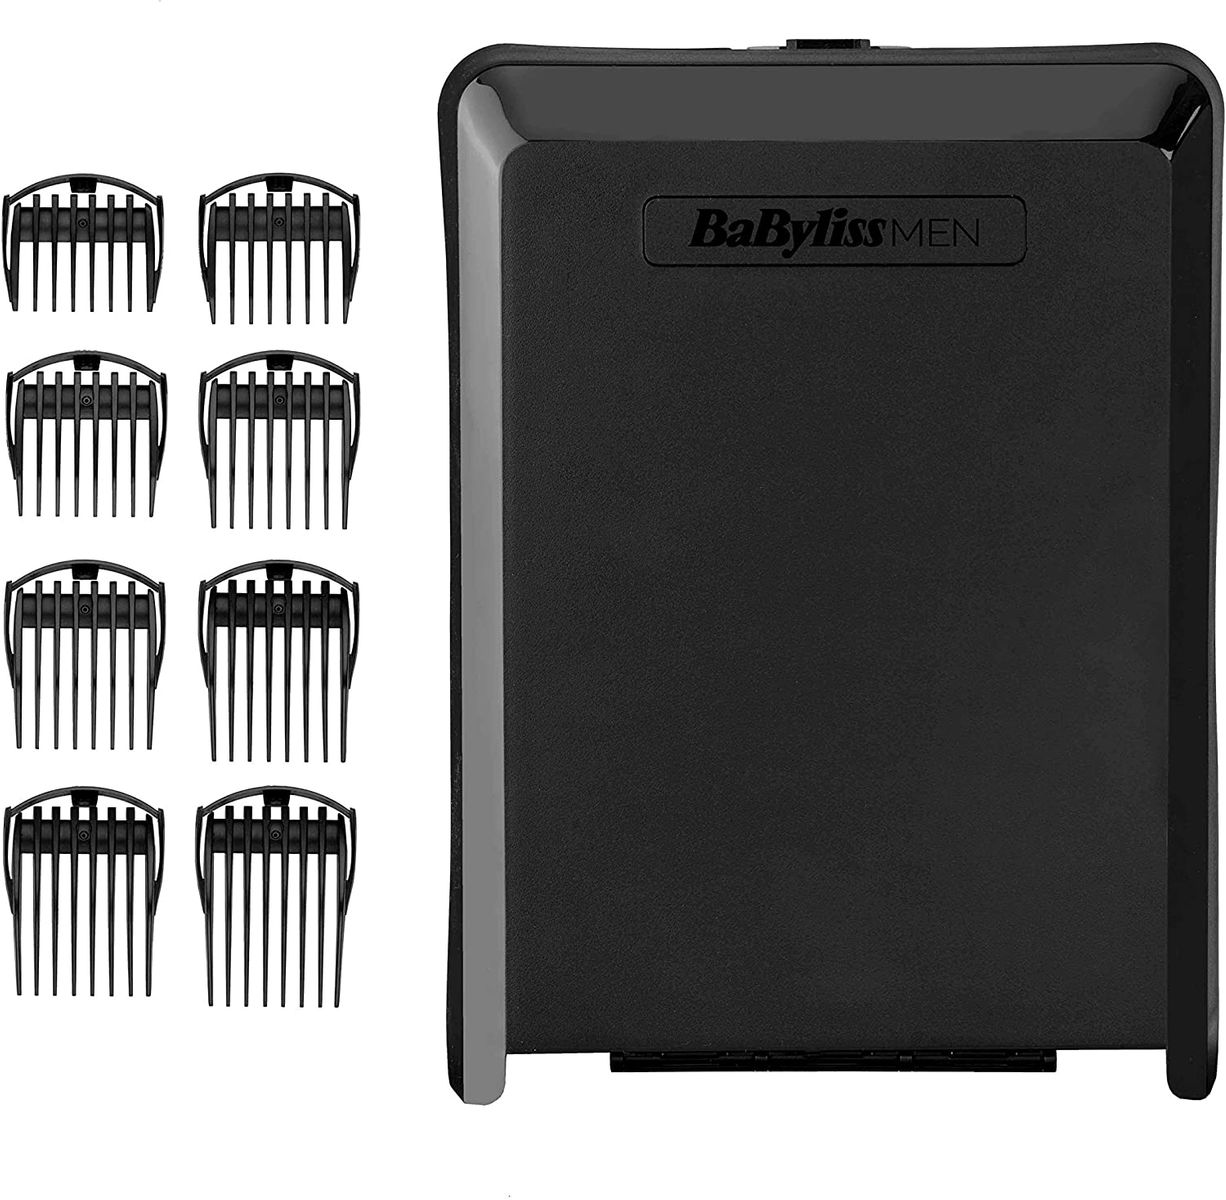 Babyliss Menss Battery-Powered Hair Trimmer